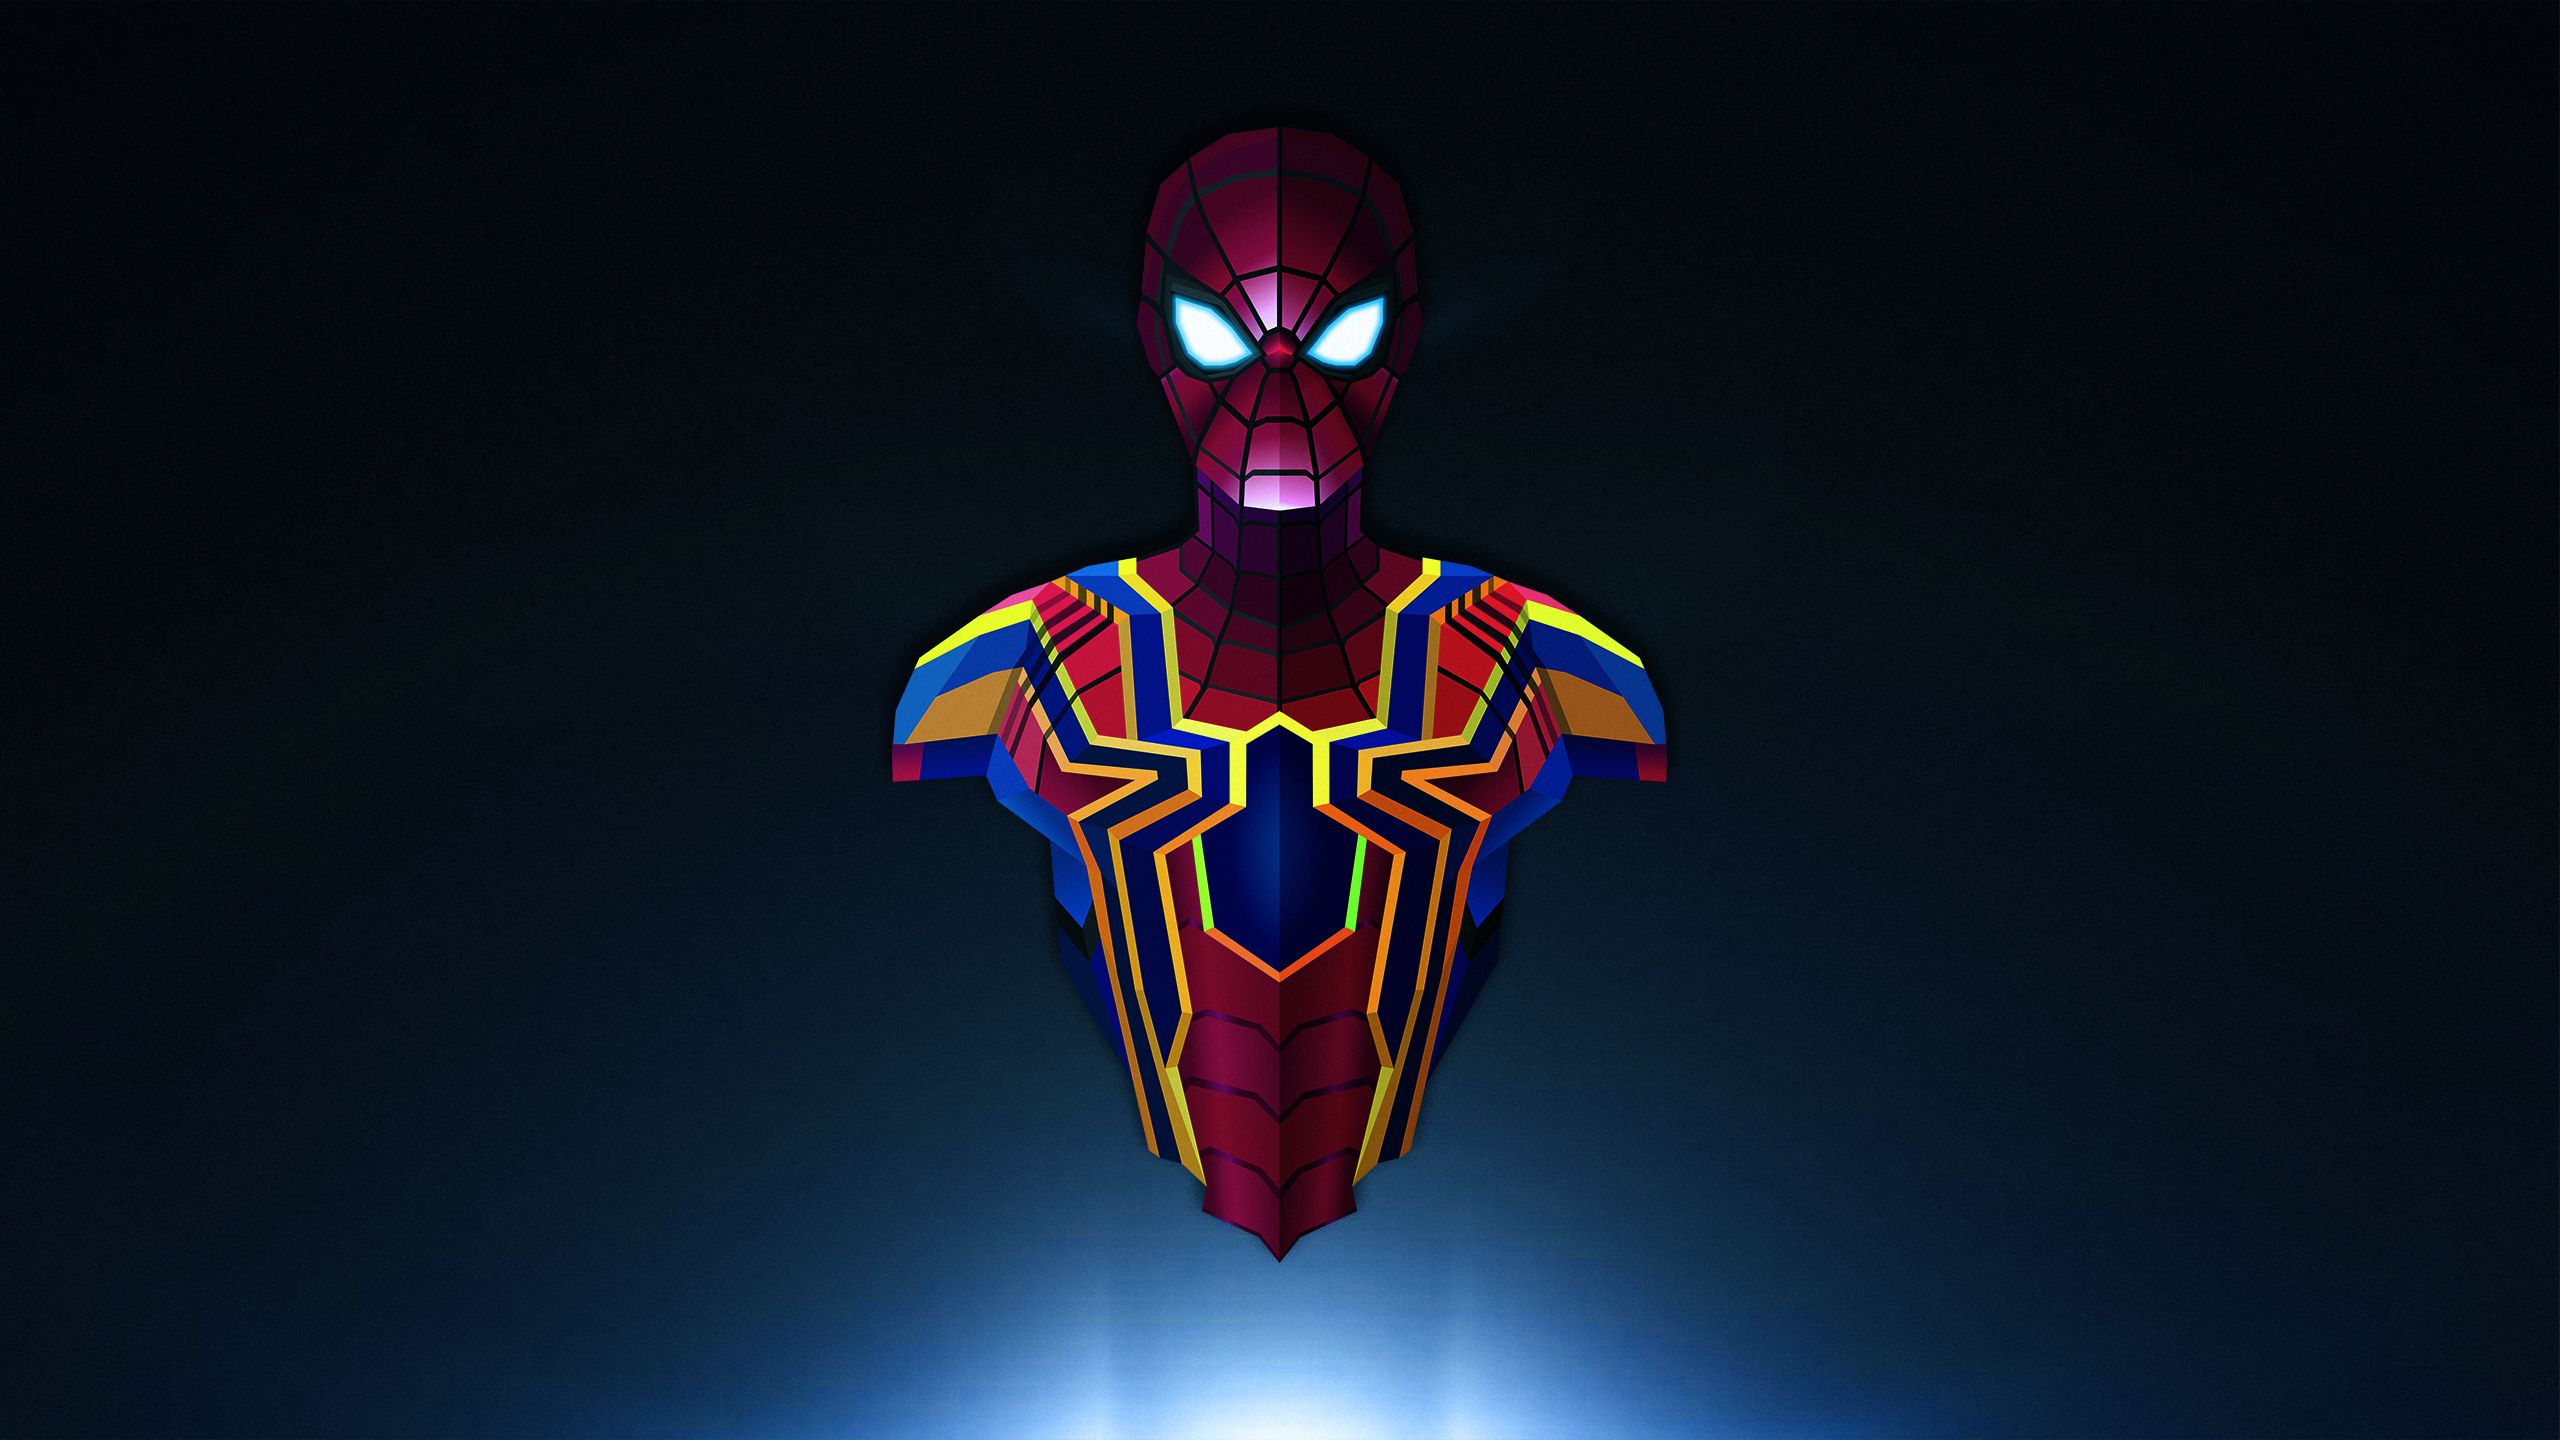 #Spider Man, #Avengers: Infinity War, #Marvel Comics